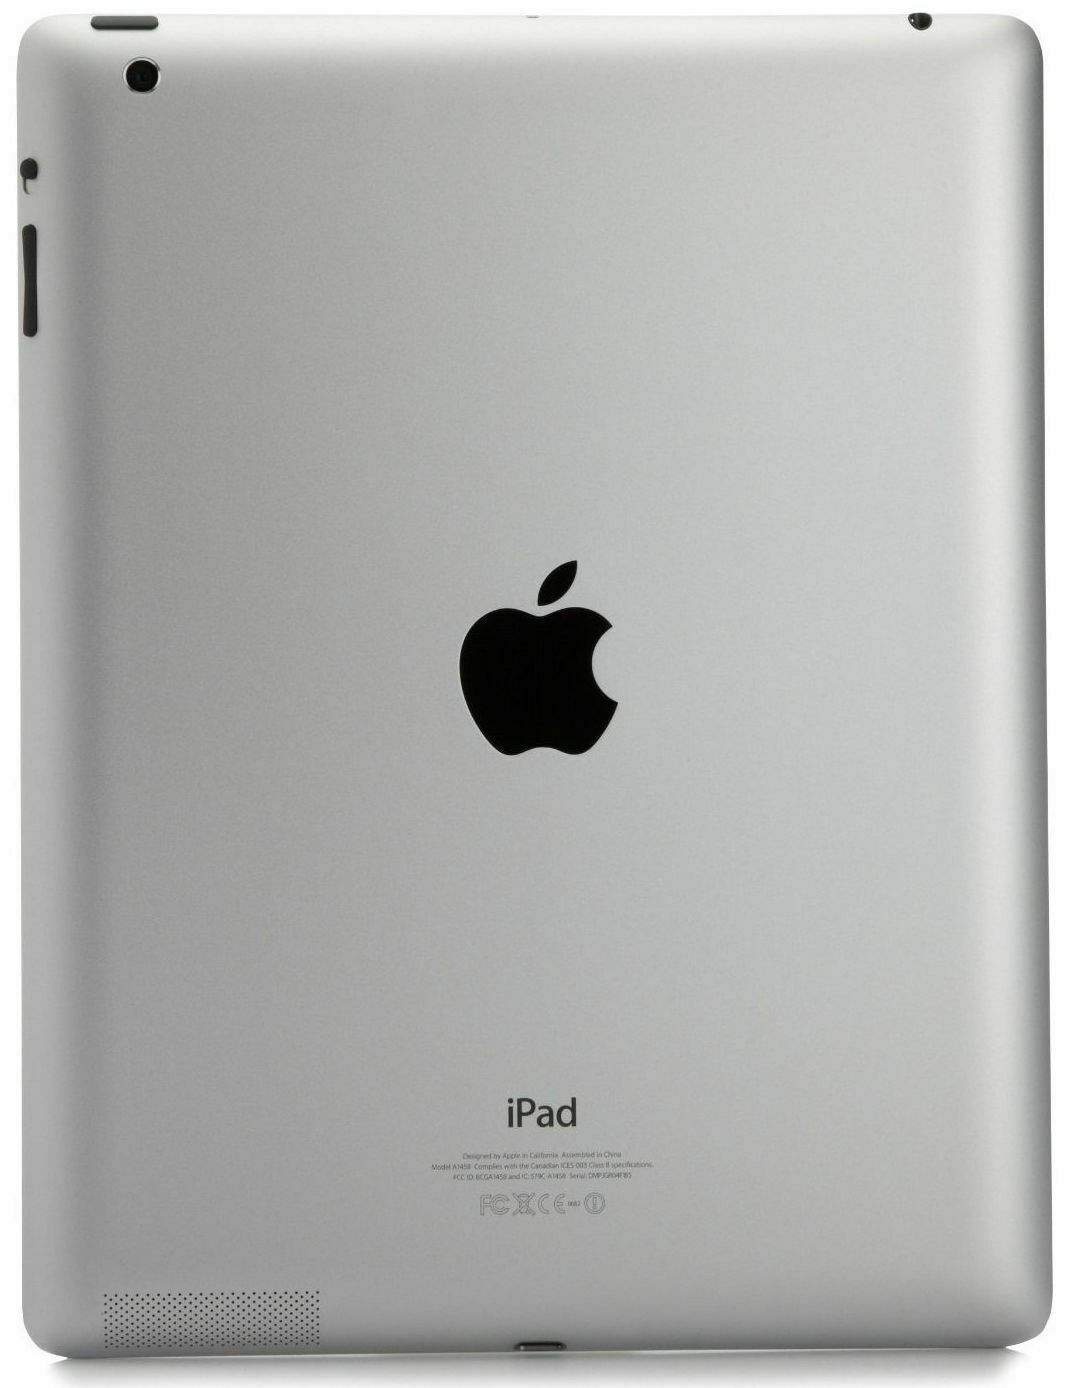 Restored Apple iPad 4 9.7" WiFi IOS Tablet 16GB Black (Refurbished) - image 2 of 3